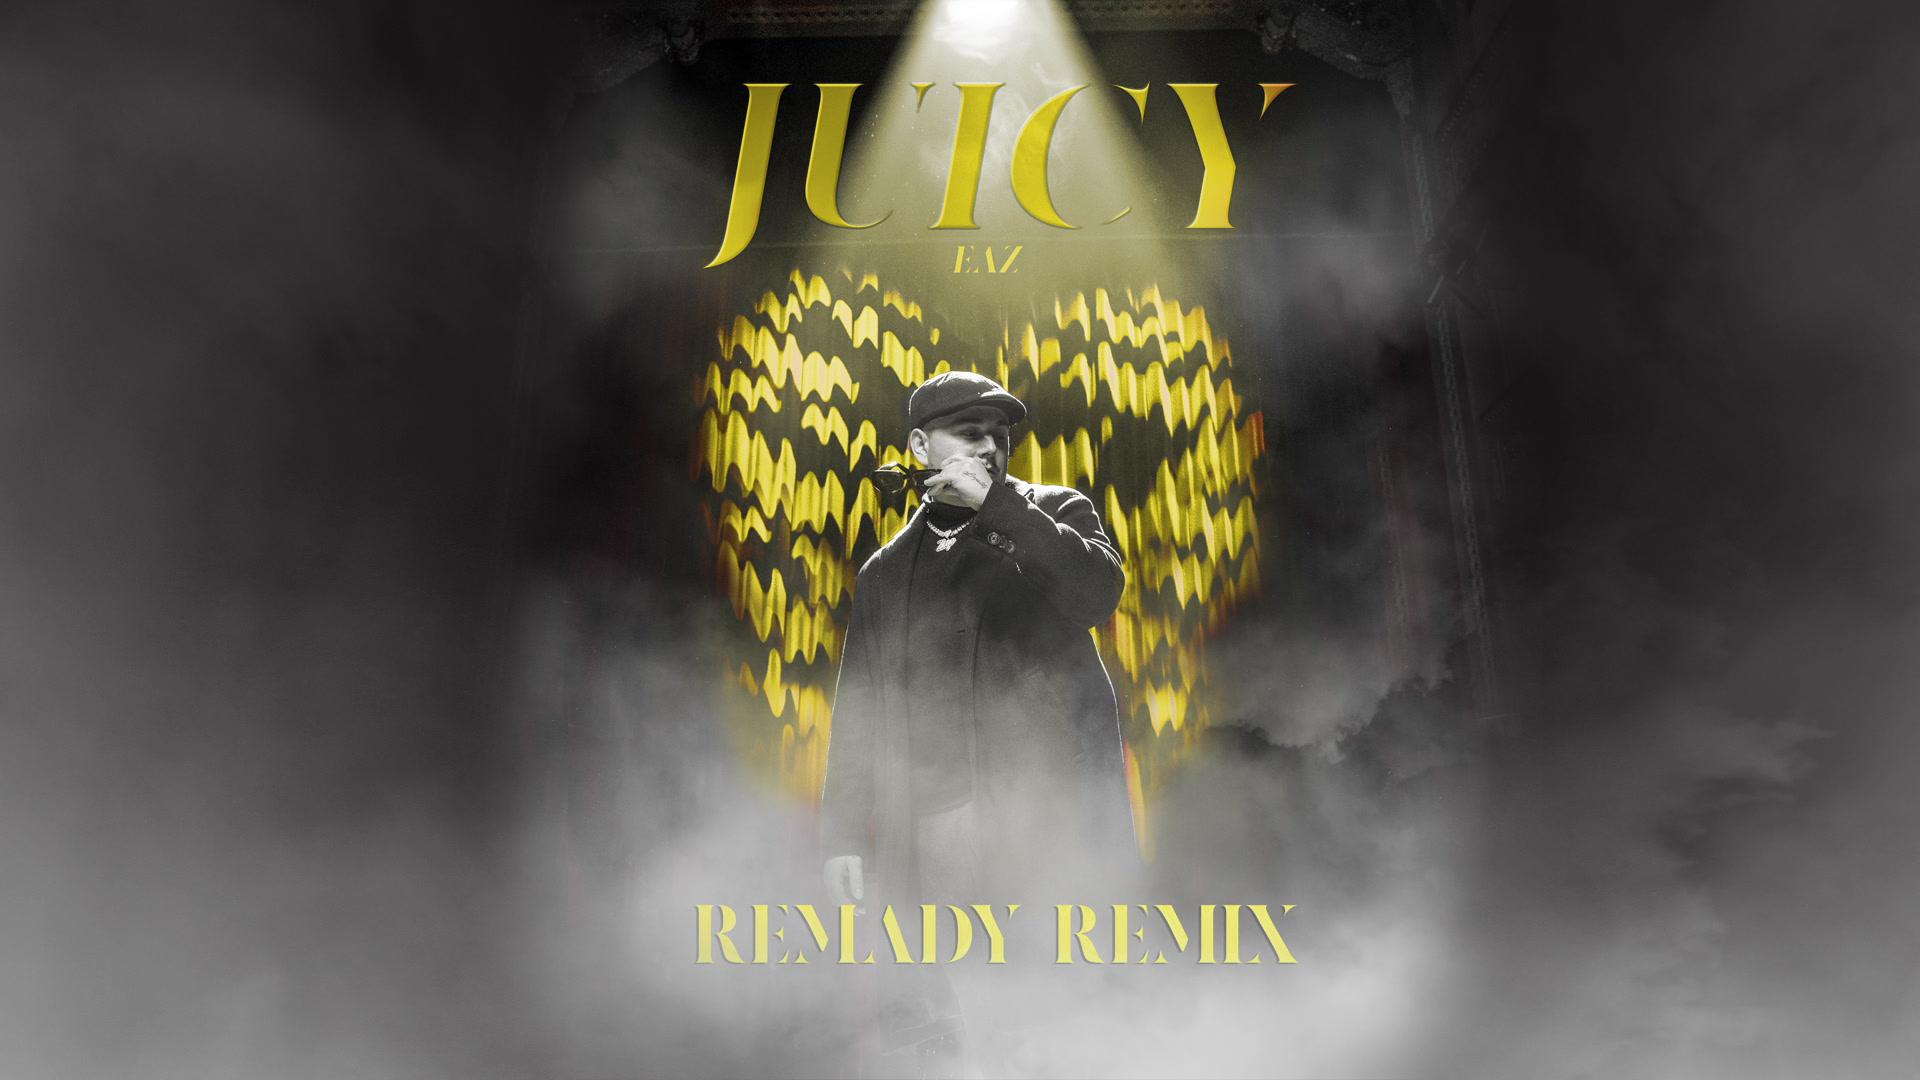 EAZ - Juicy (Remady Remix / Audio)